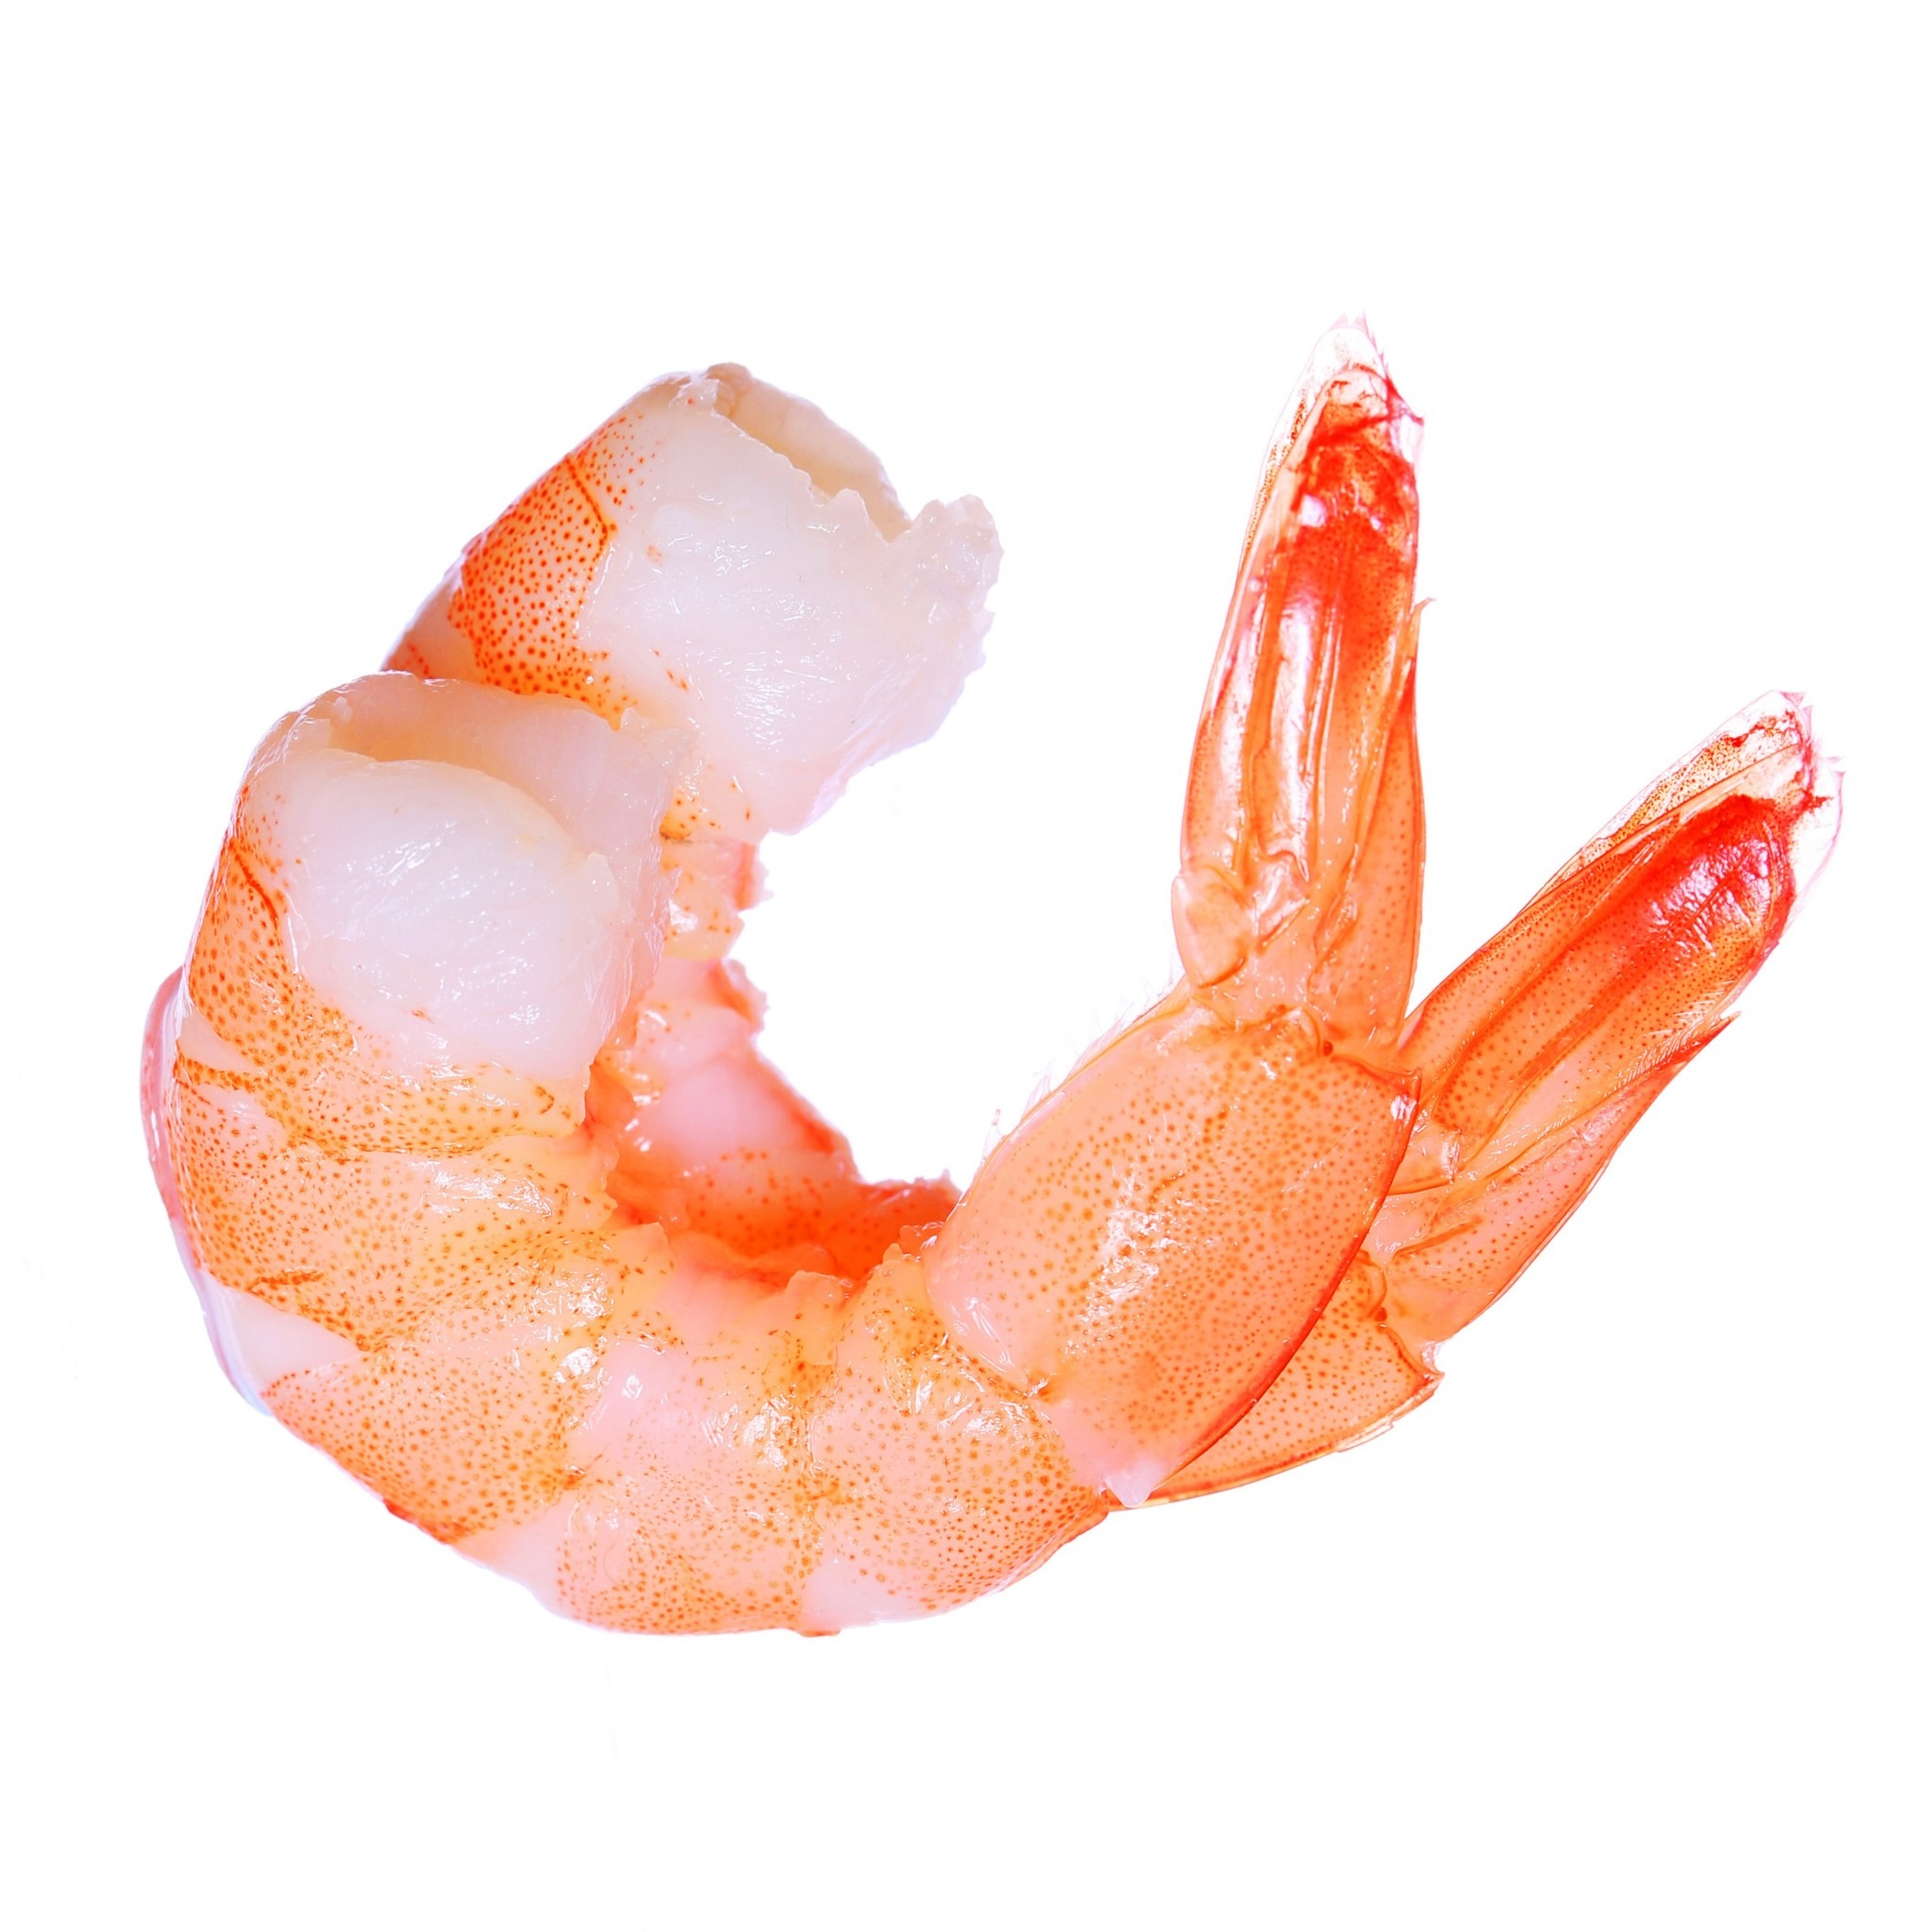 everyday economics and comparative advantage and shrimp production